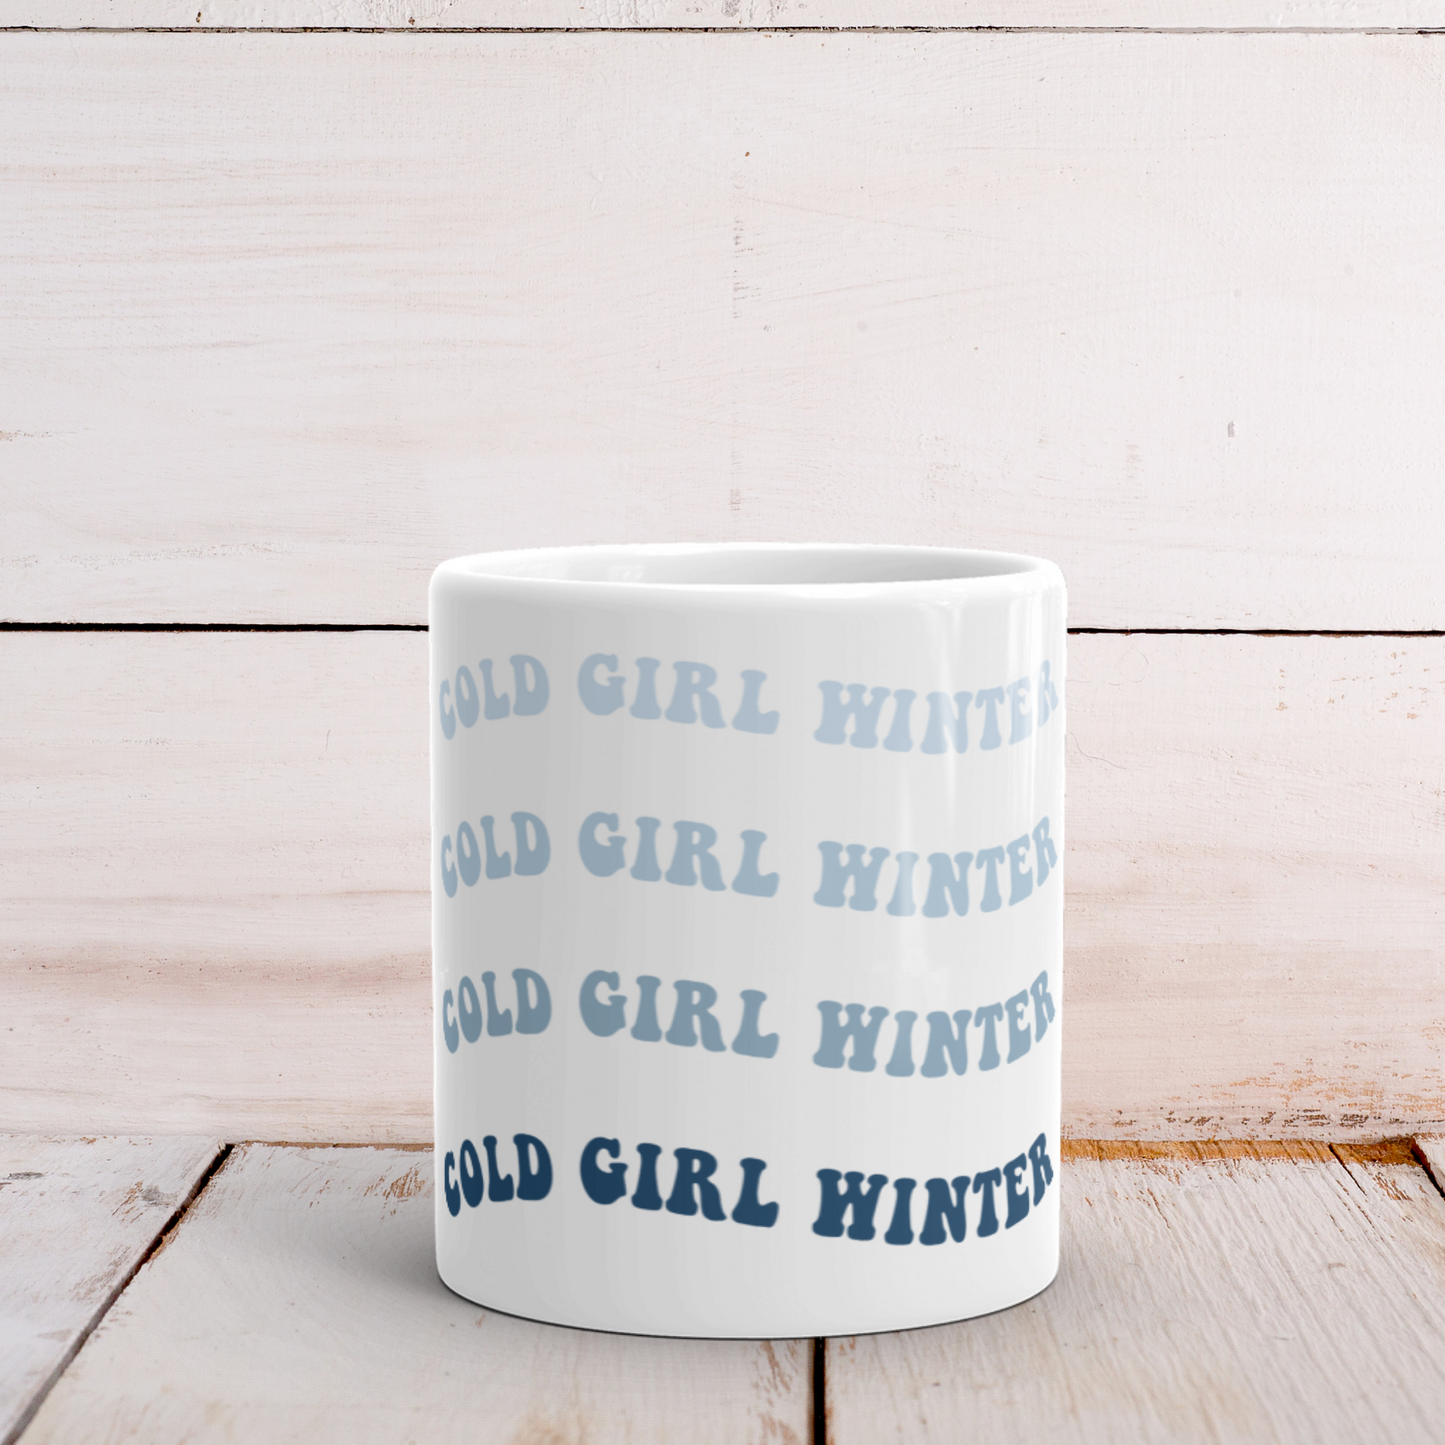 Cold Girl Winter Gift Set